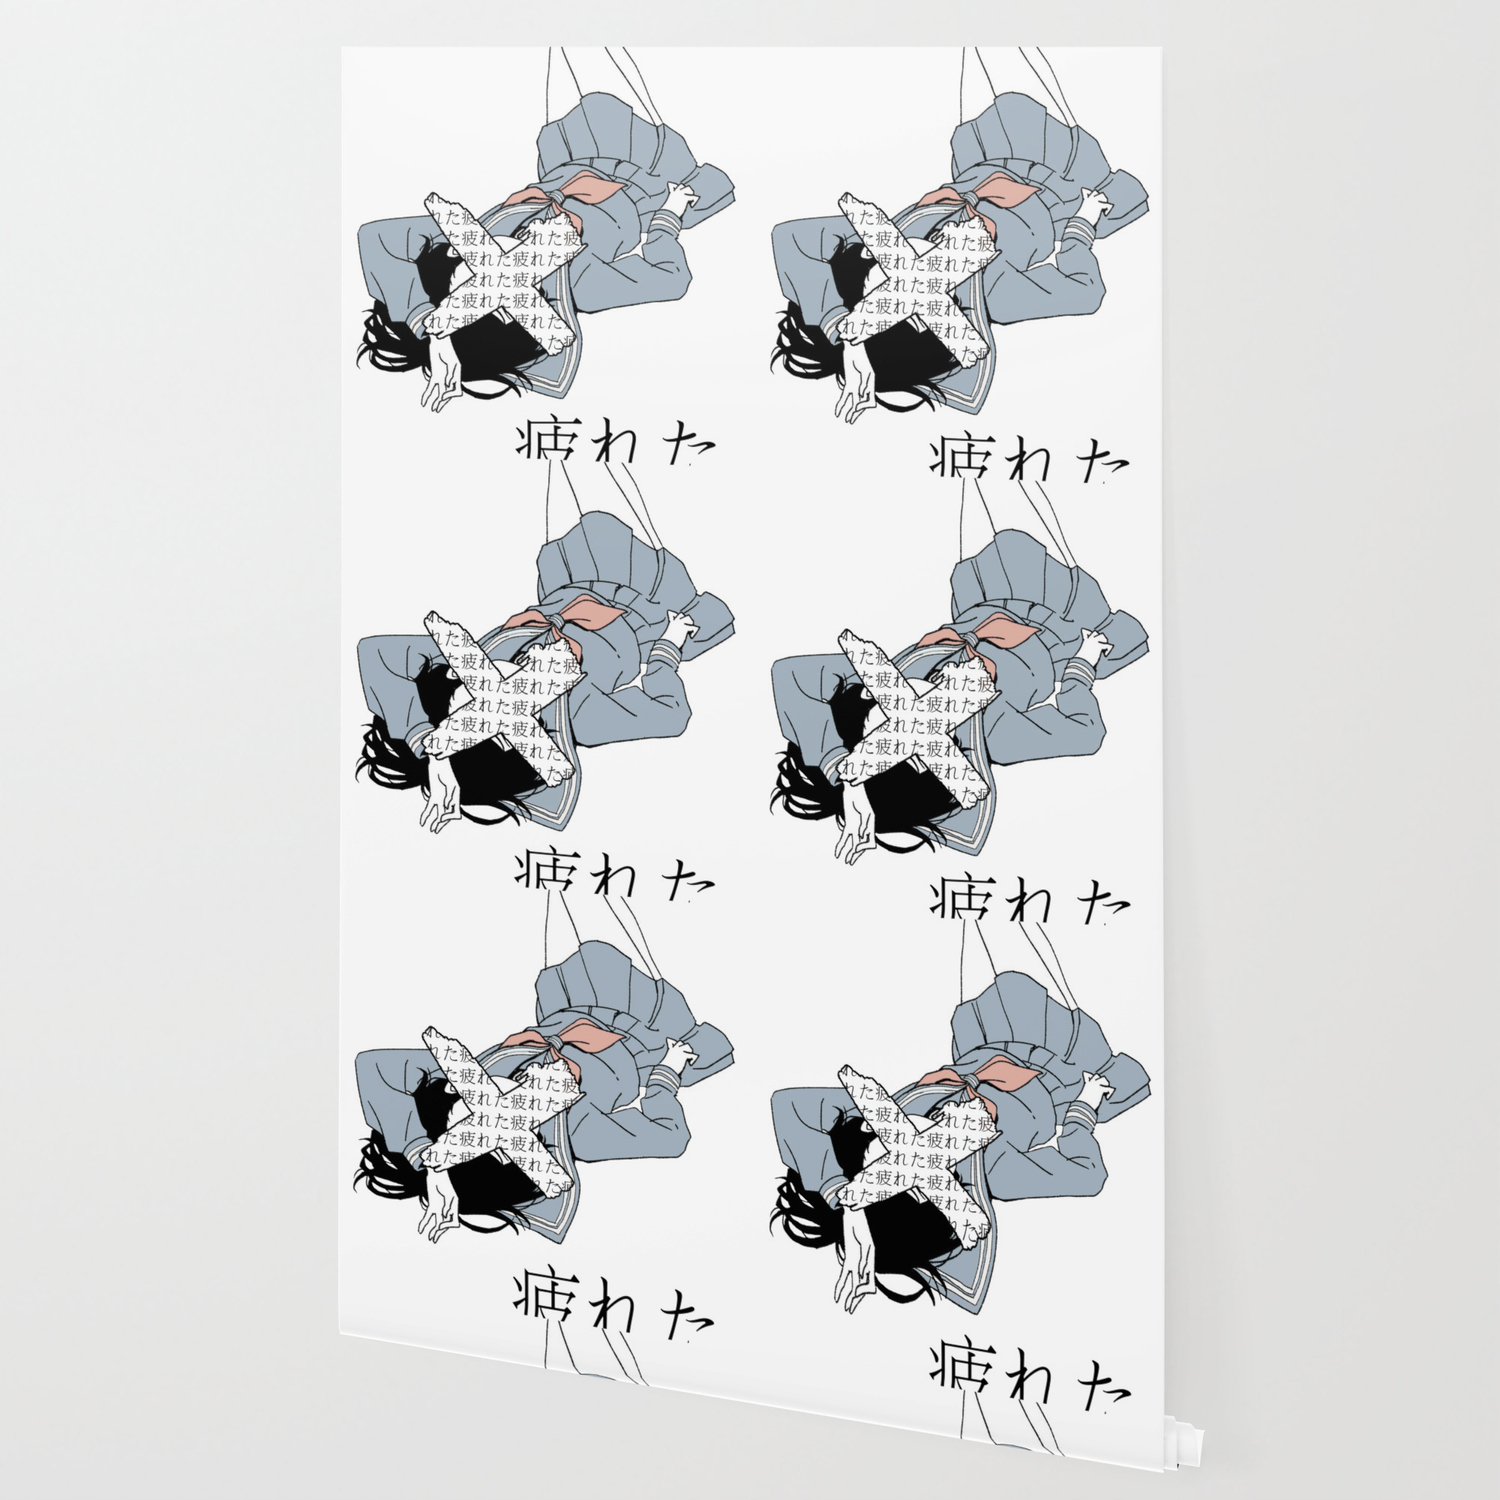 Tired Sad Japanese Anime Aesthetic Wallpaper By Poser Boy Society6